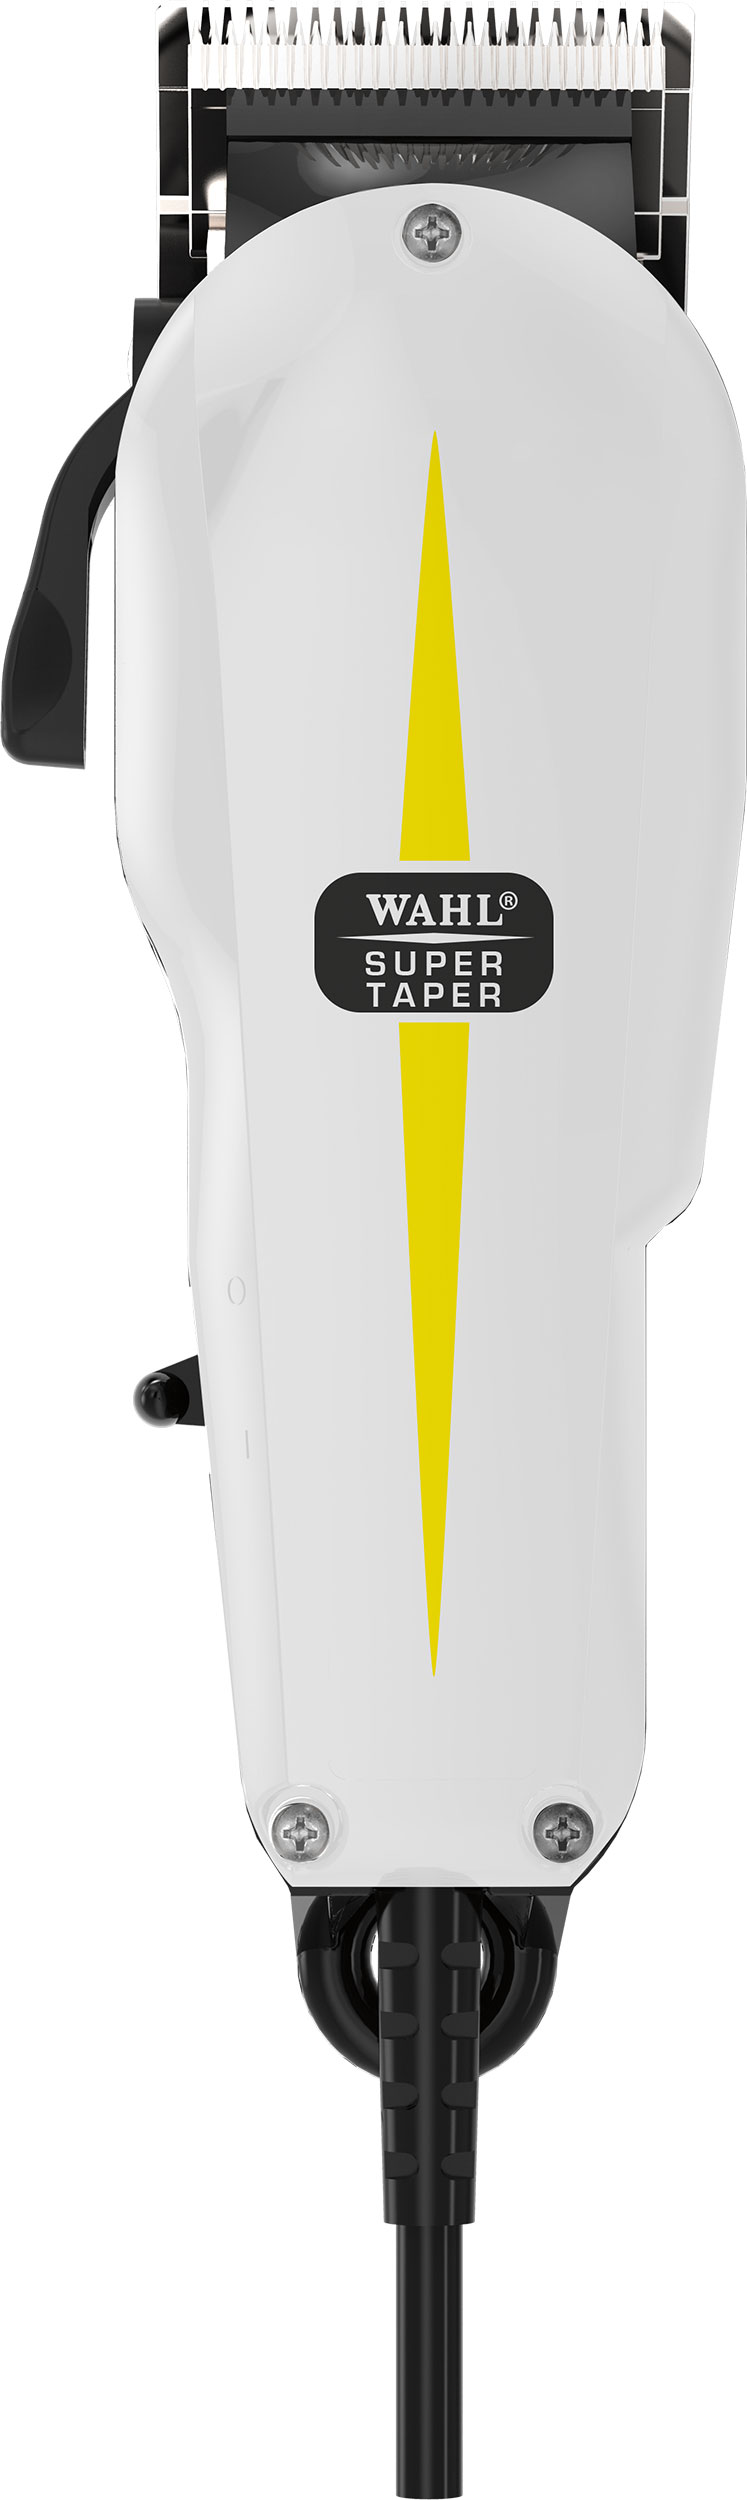 střihací strojek WAHL Super Taper